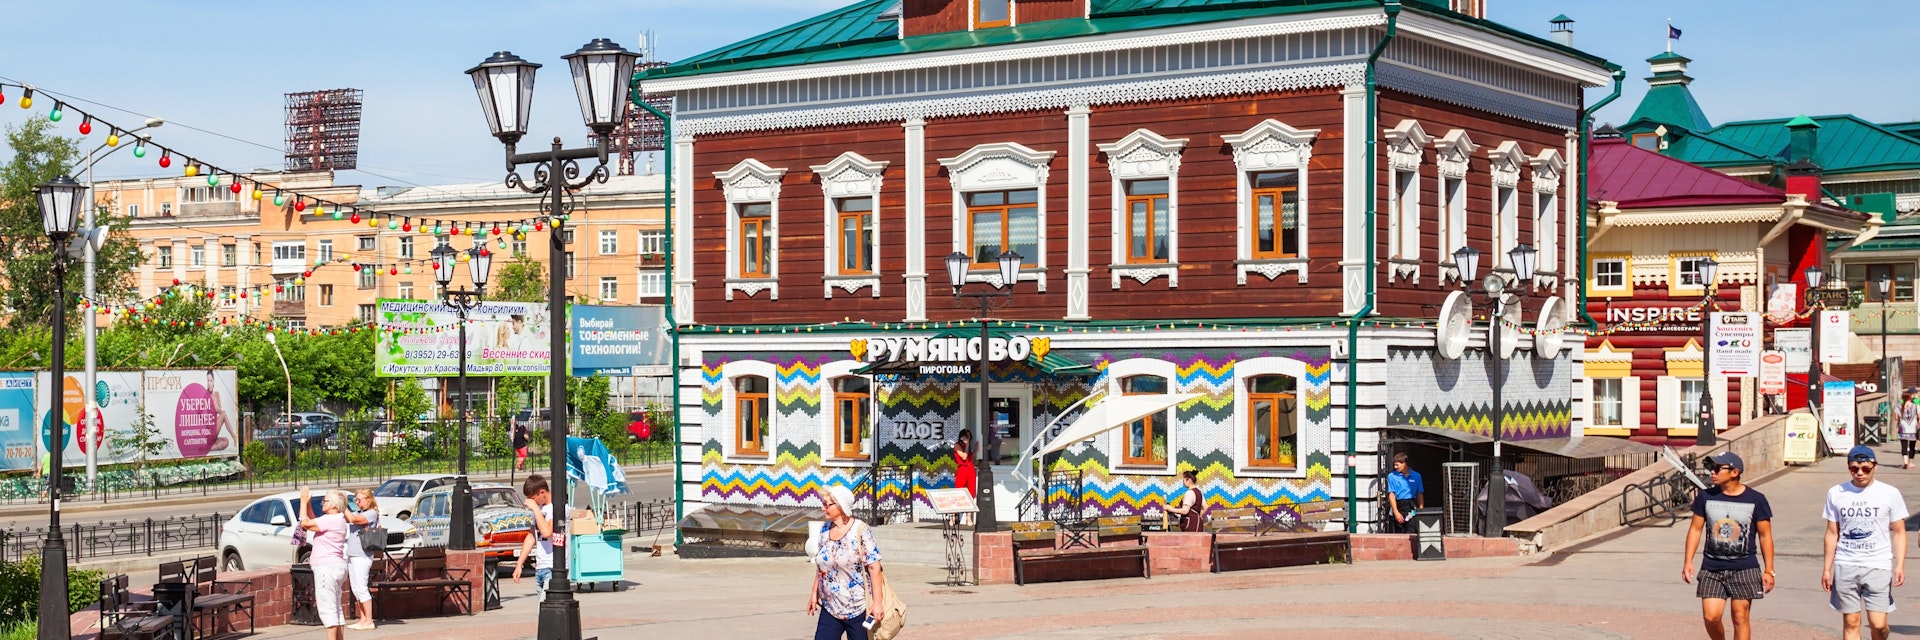 130 Kvartal quarter, a neighbourhood of the historic buildings in the center of Irkutsk city in Russia.